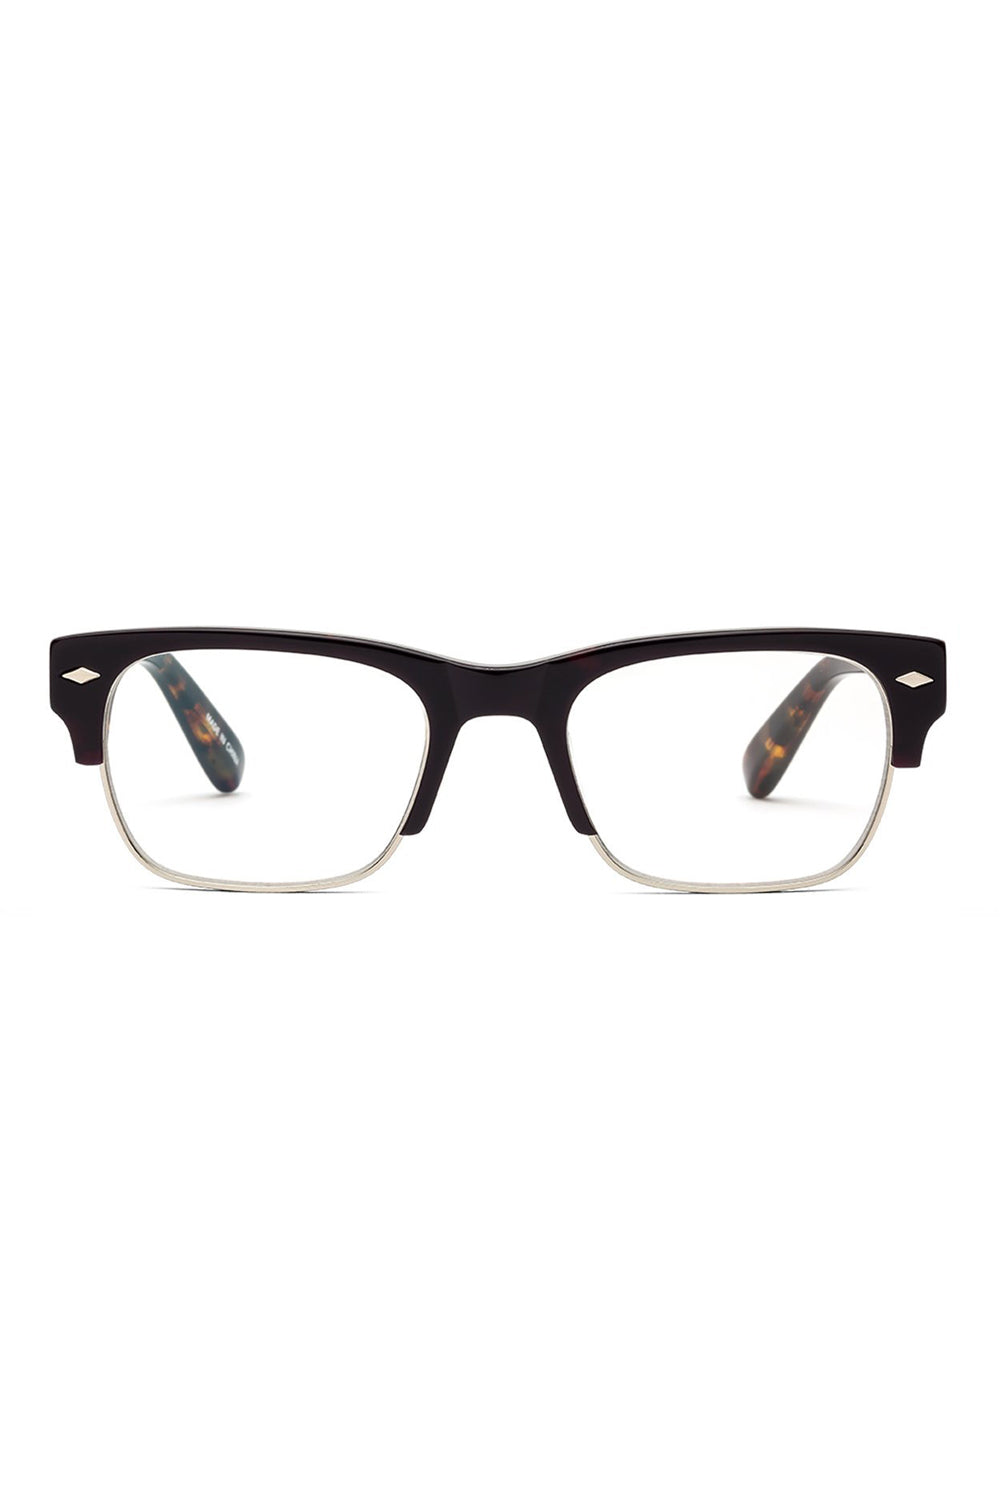 Caddis Navin Optical Glasses